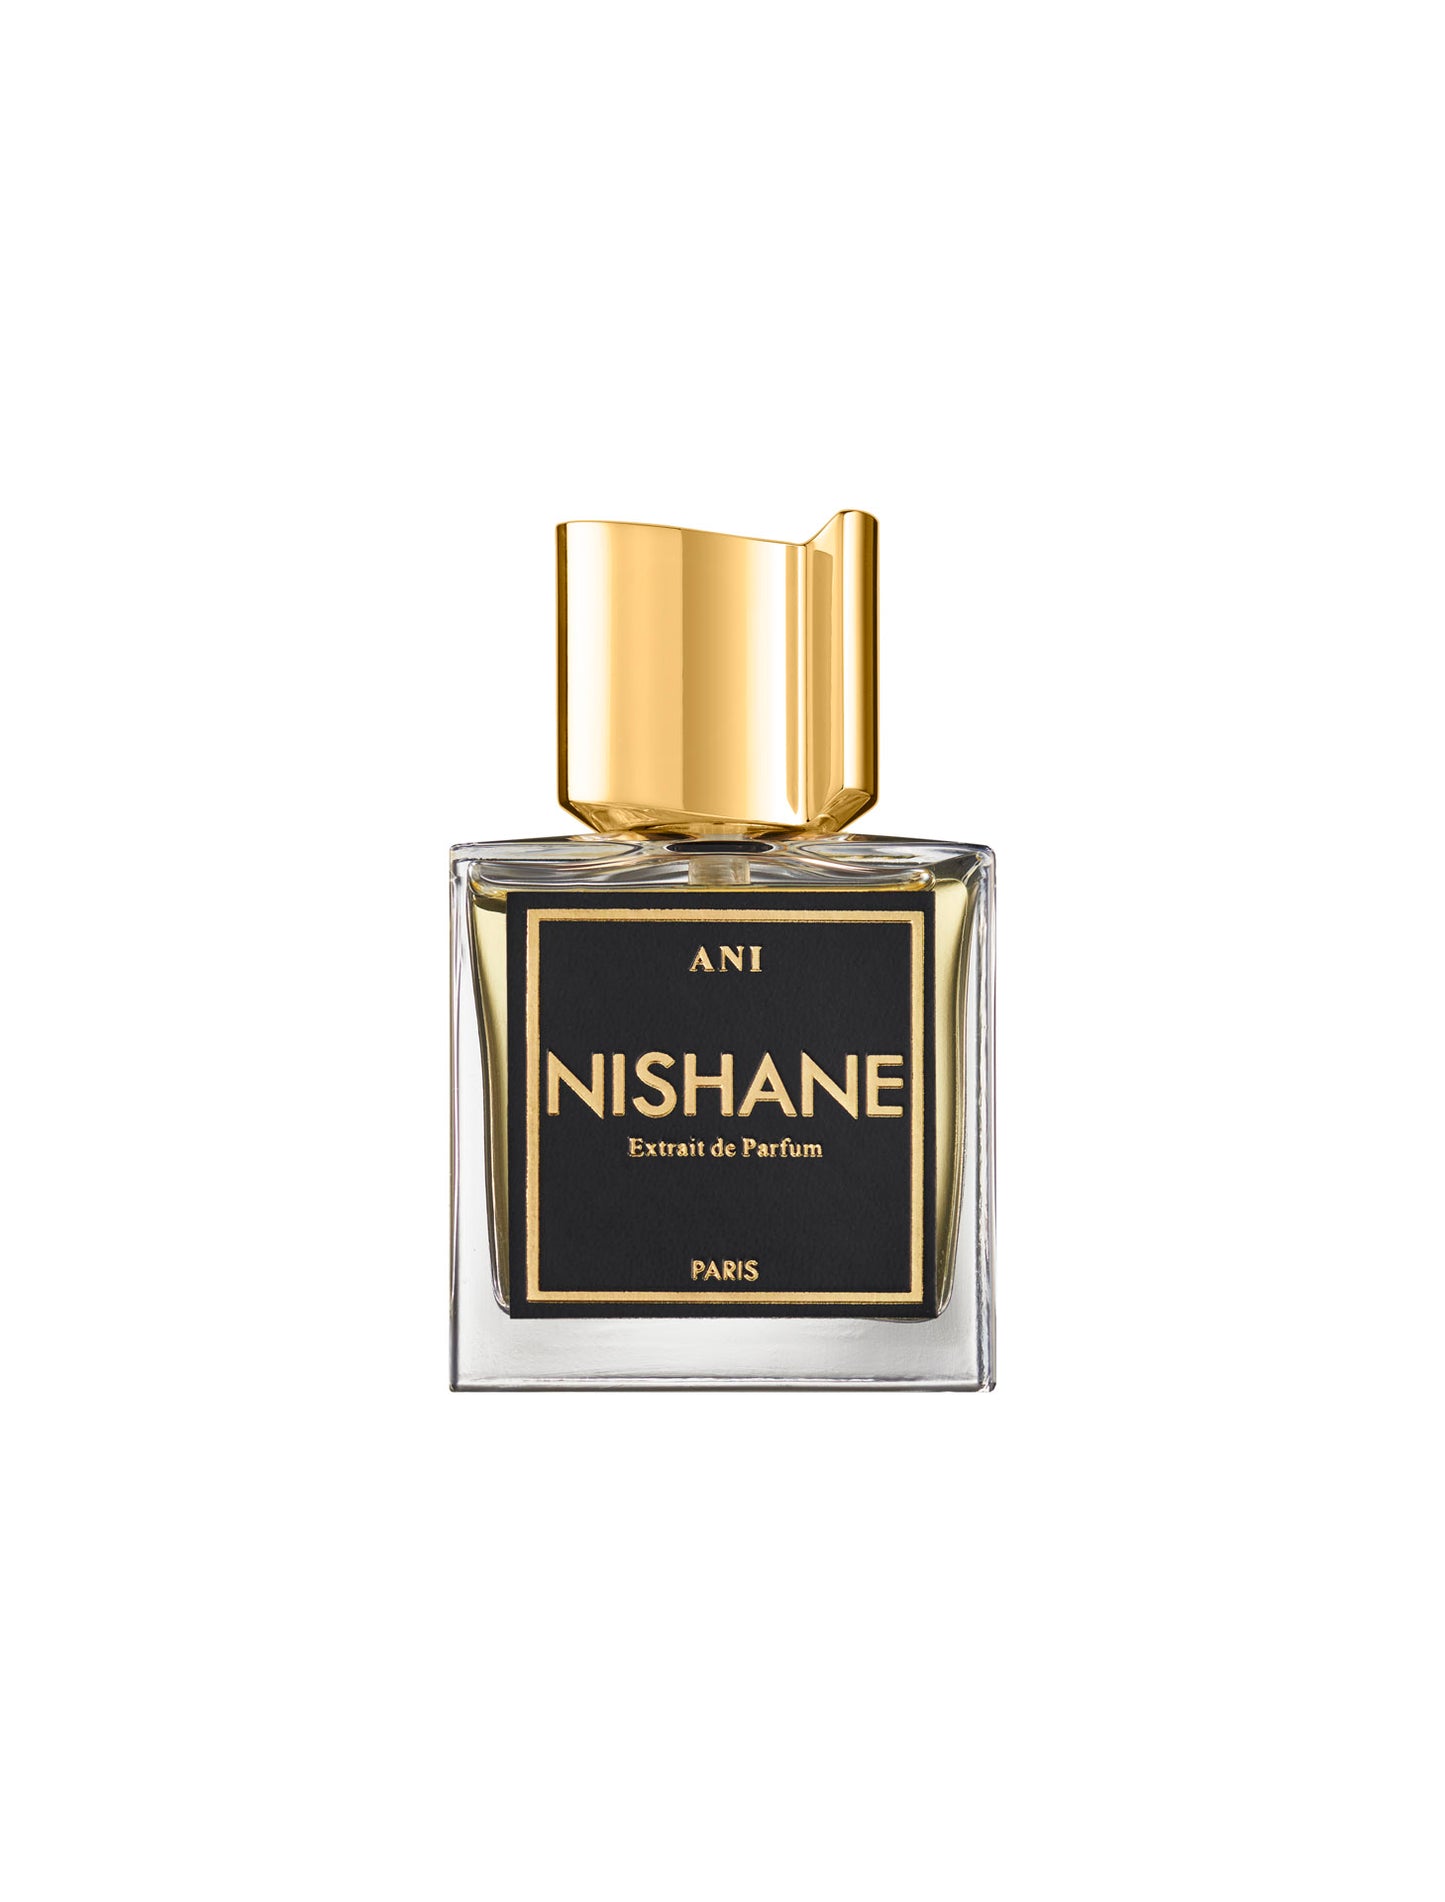 Nishane - ANI Extrait de Parfum